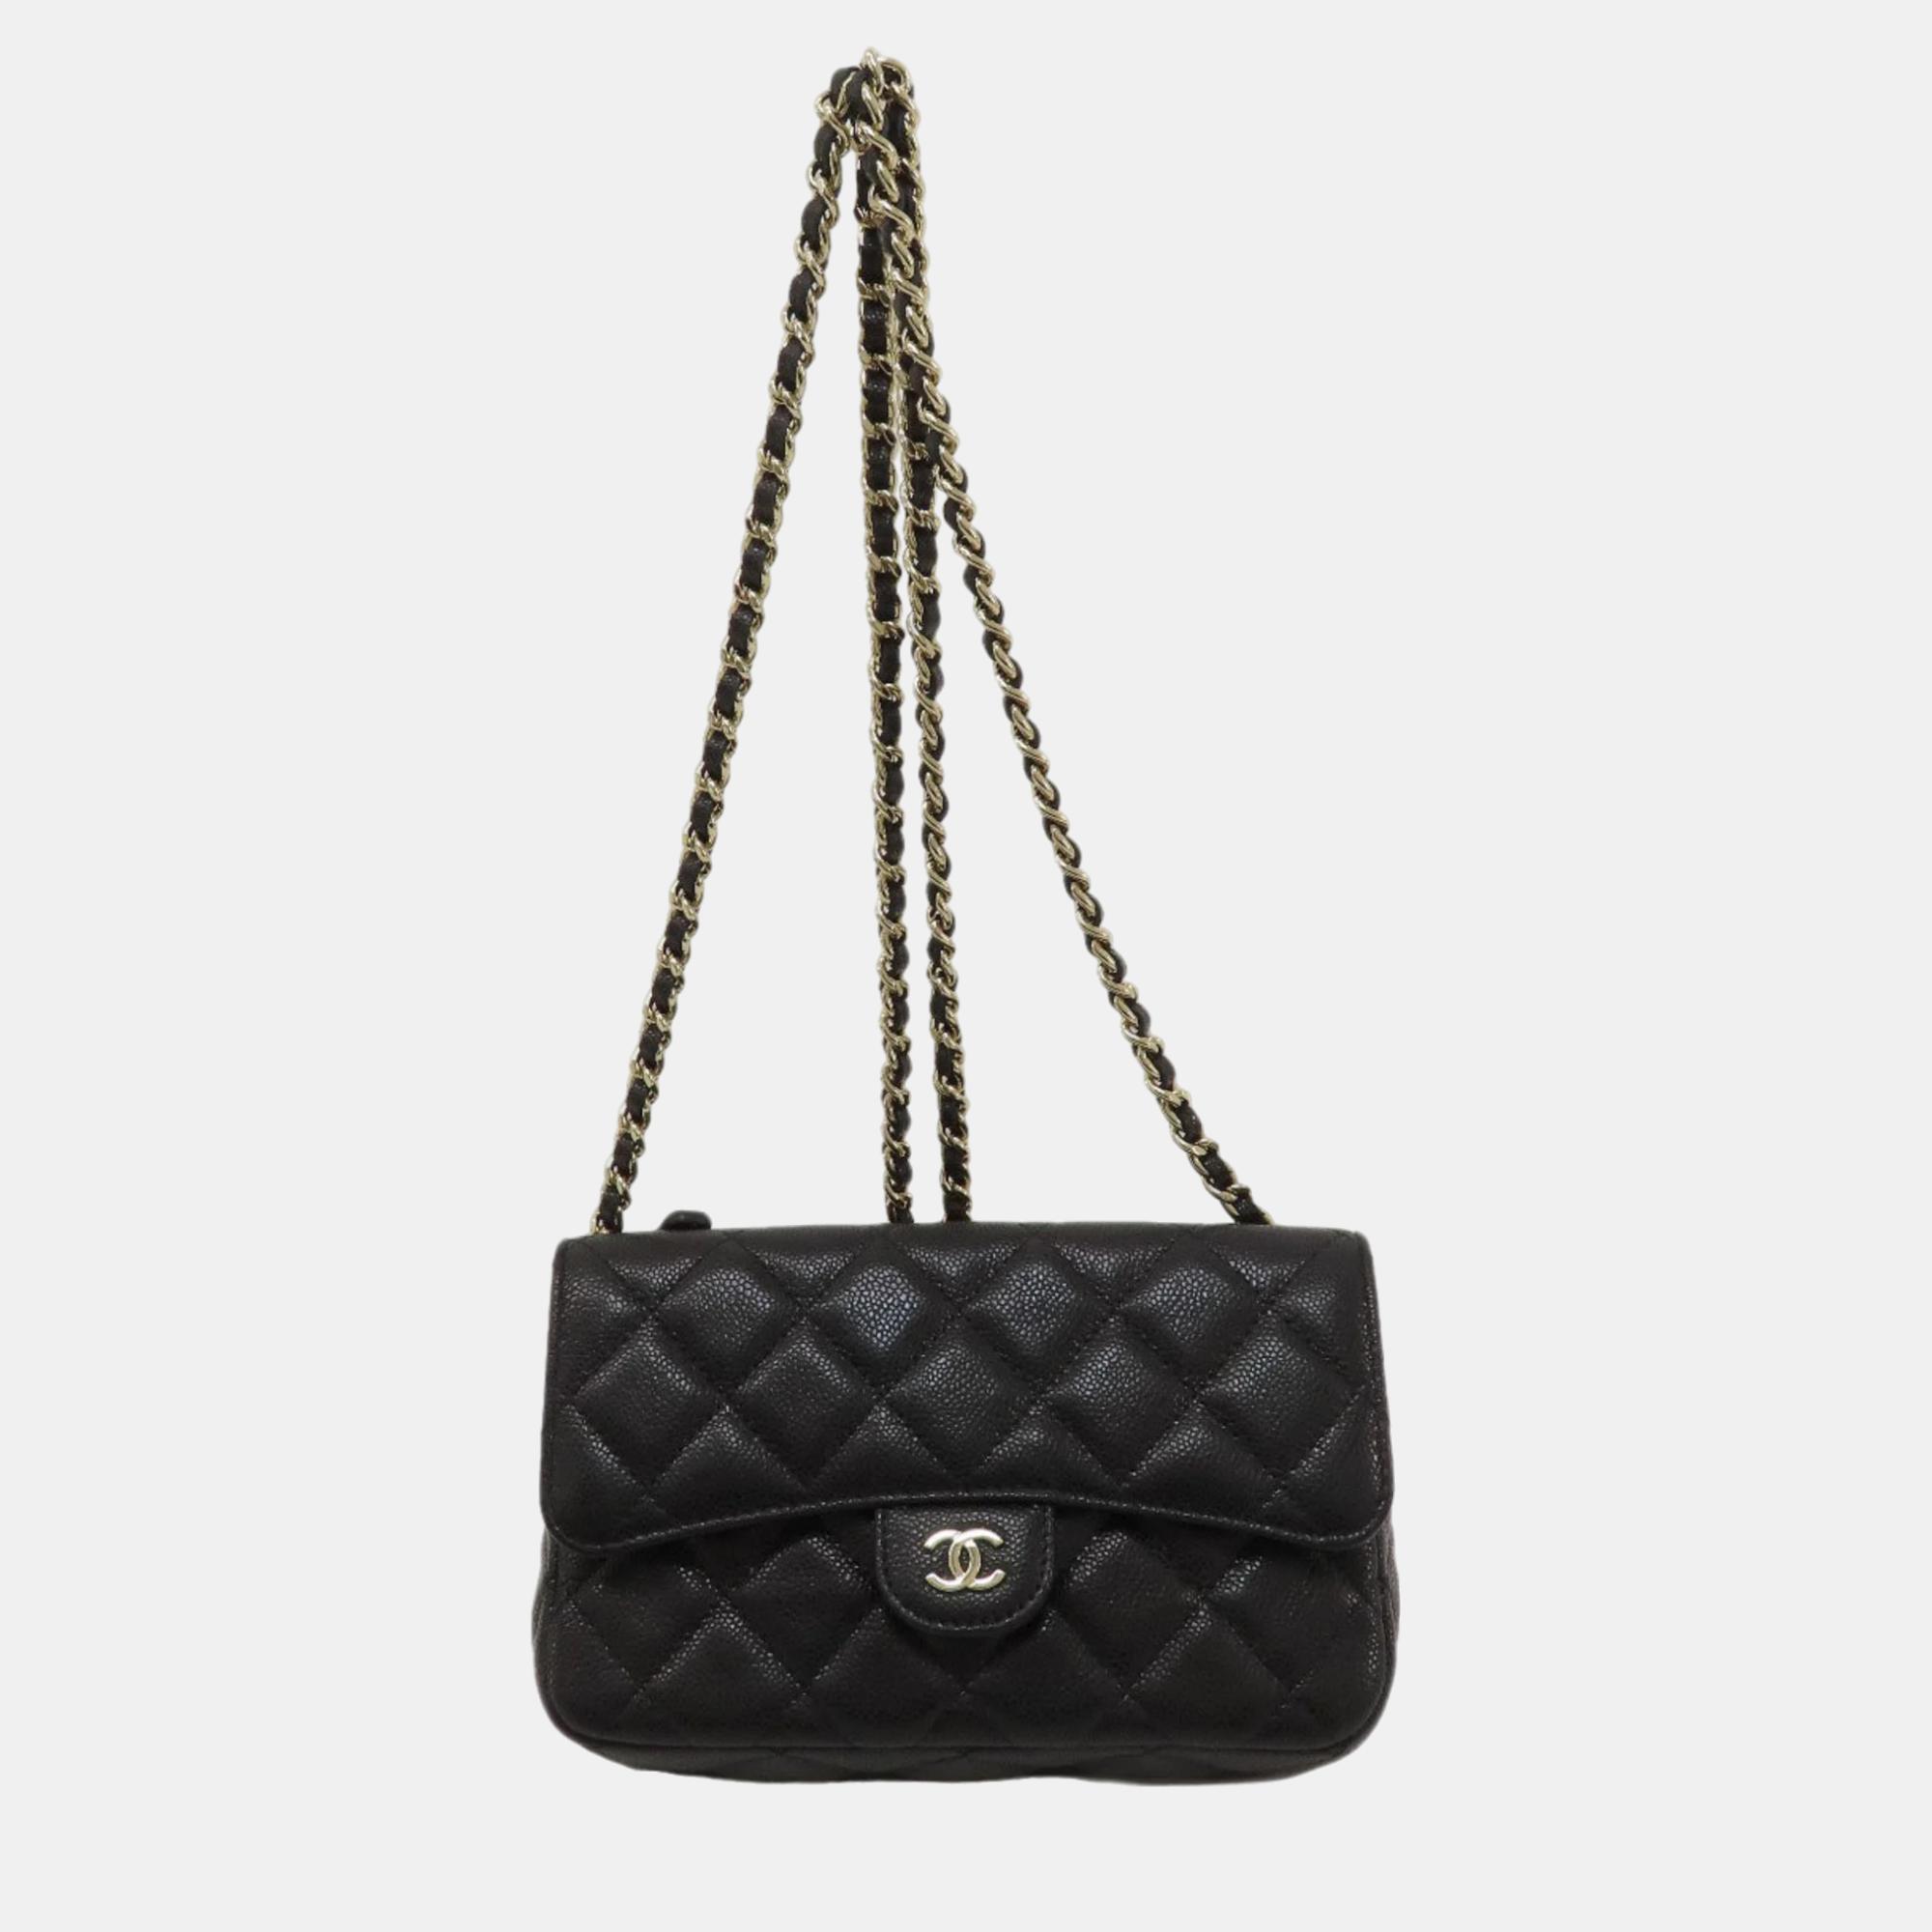 Chanel black caviar leather chain shoulder bag